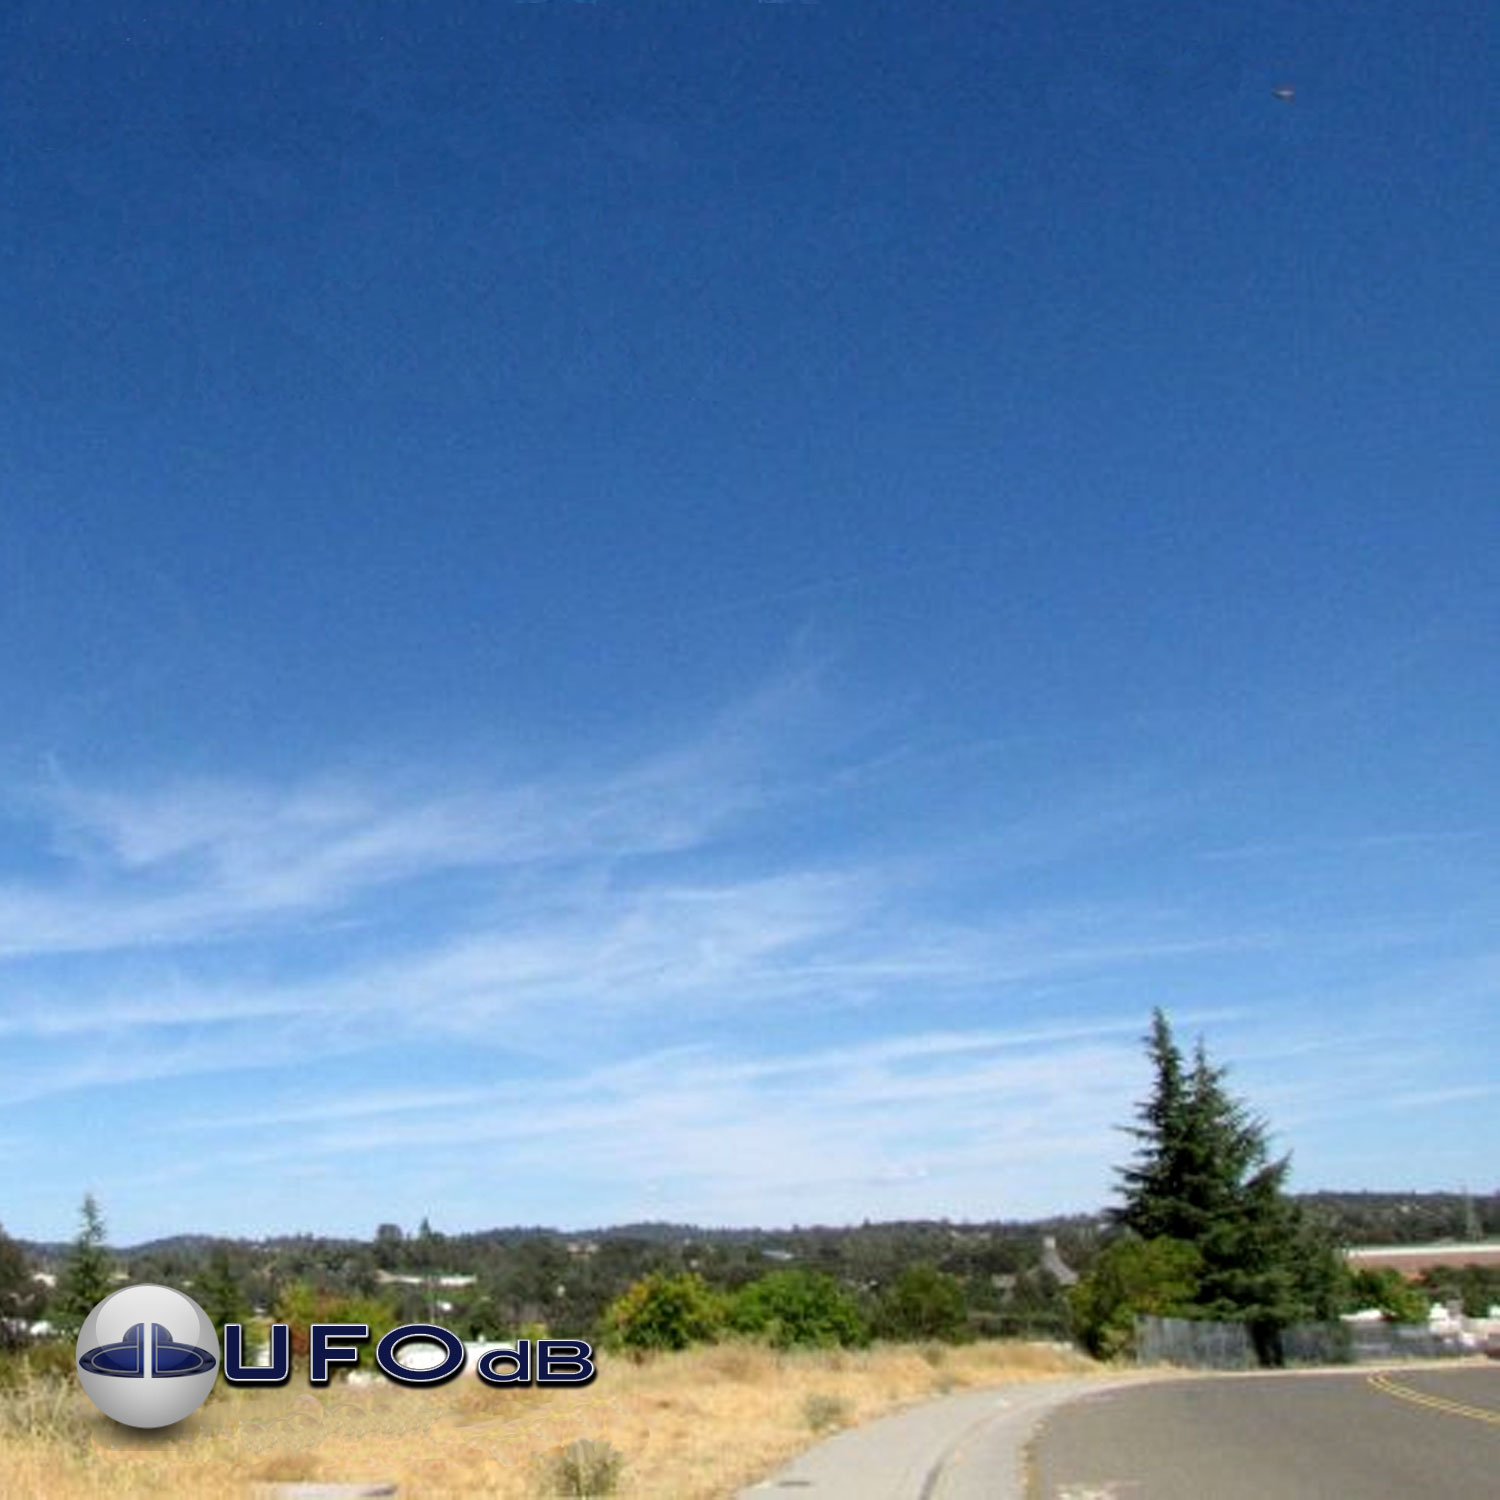 UFO picture taken august 2009 over Auburn in California UFO Picture #18-1